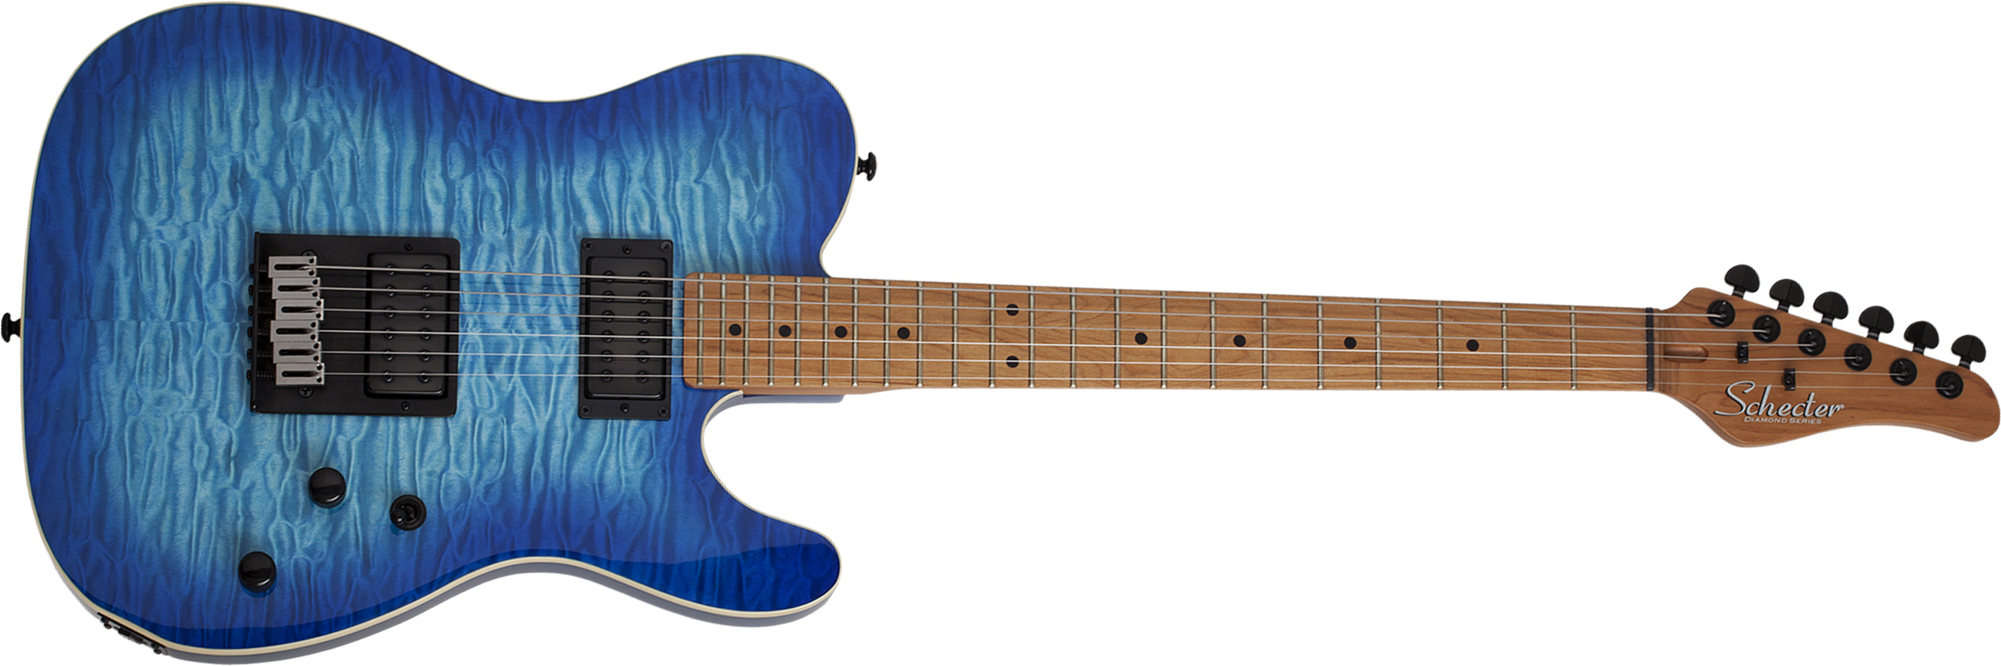 Schecter Pt Pro 2h Ht Mn - Trans Blue Burst - Televorm elektrische gitaar - Main picture